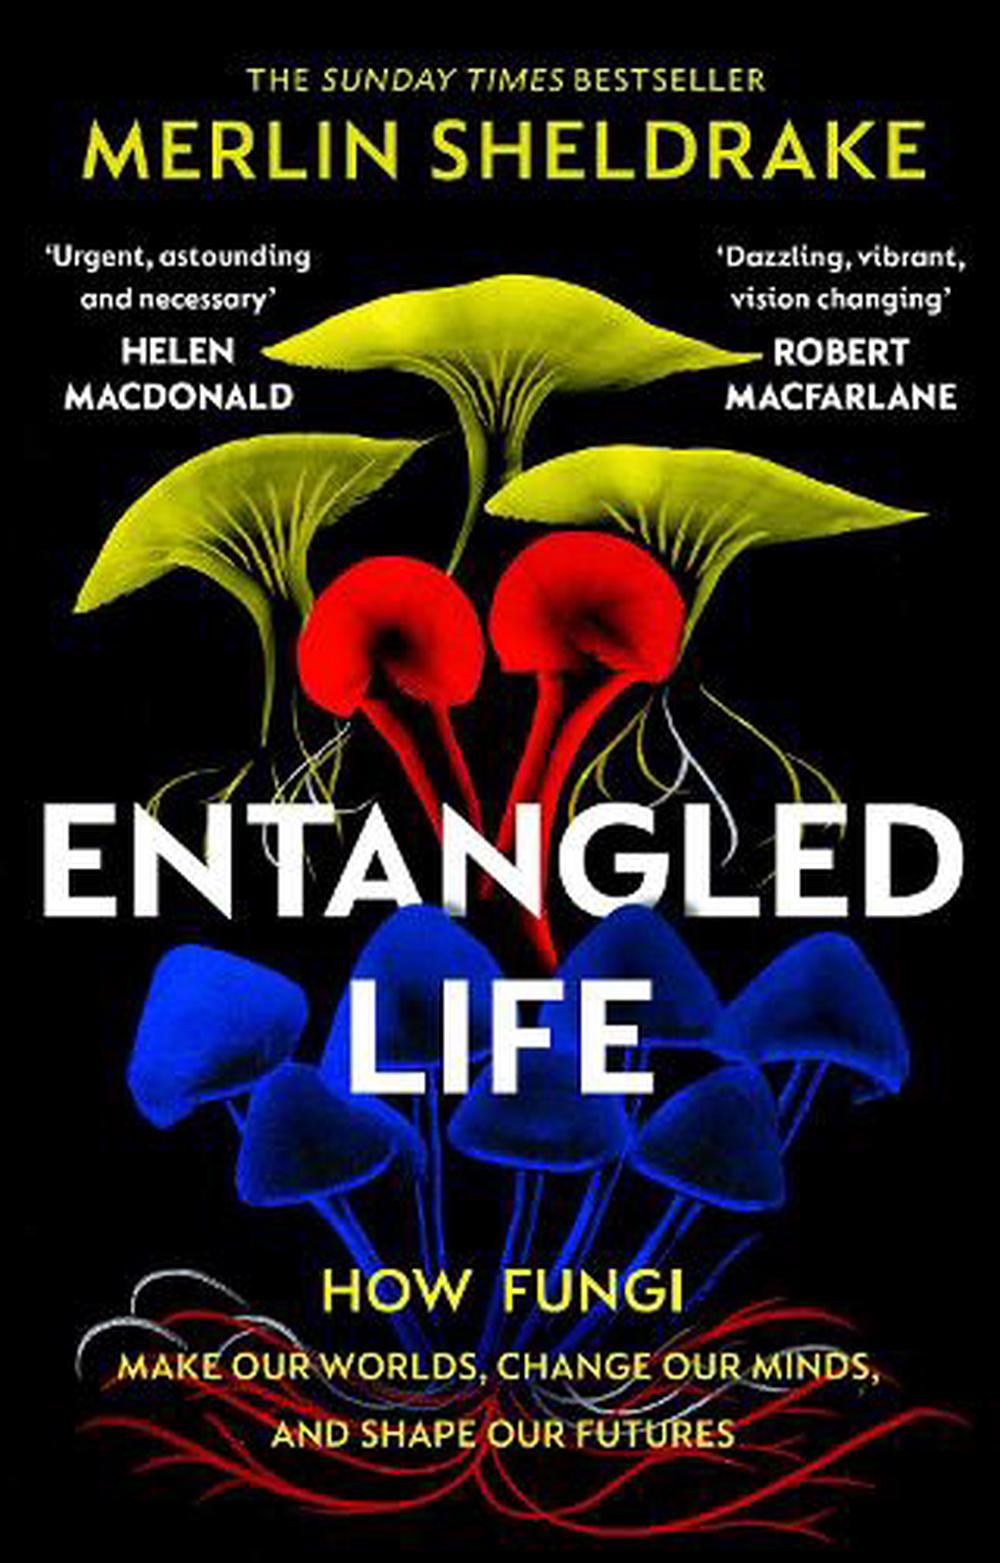 this entangled life